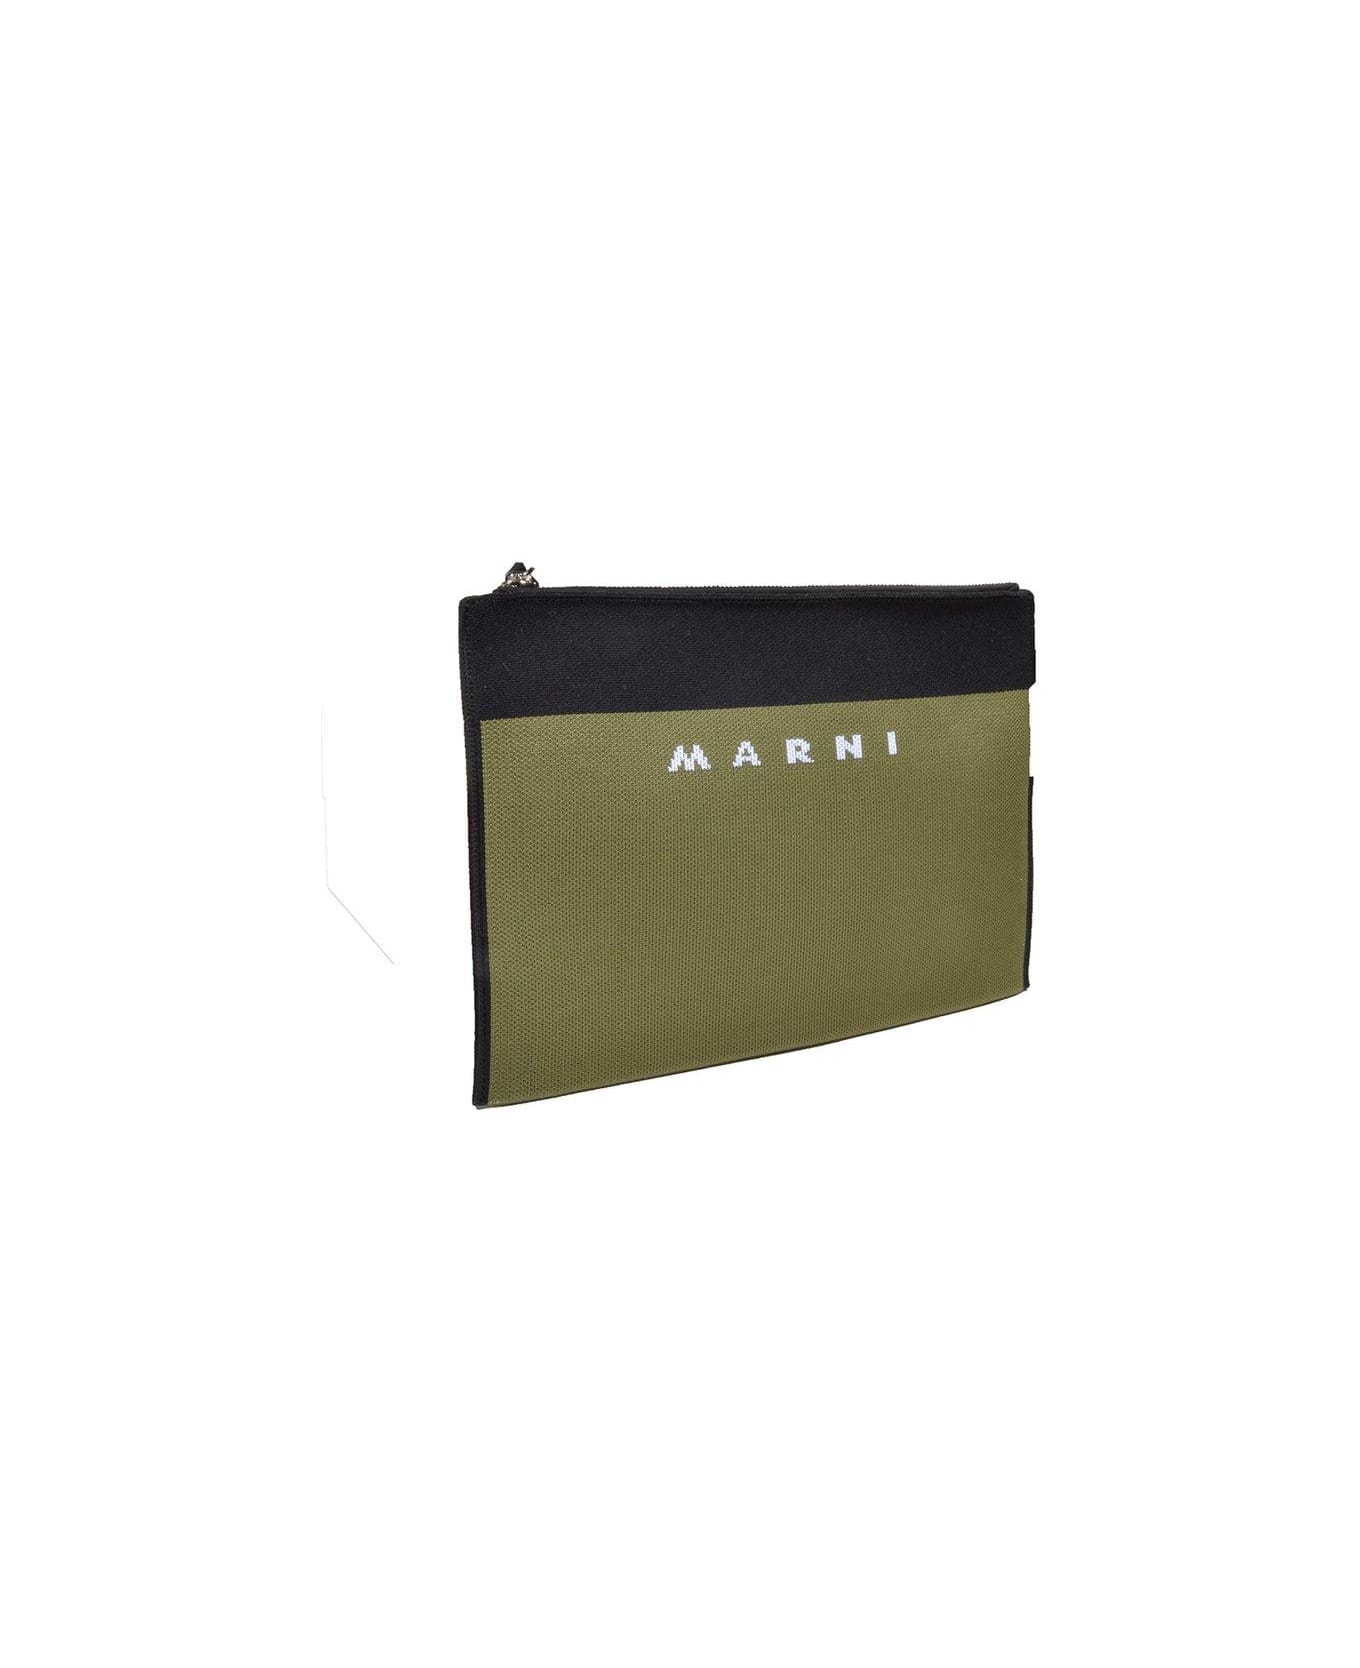 Marni Logo Embroidered Zip Clutch Bag - Green